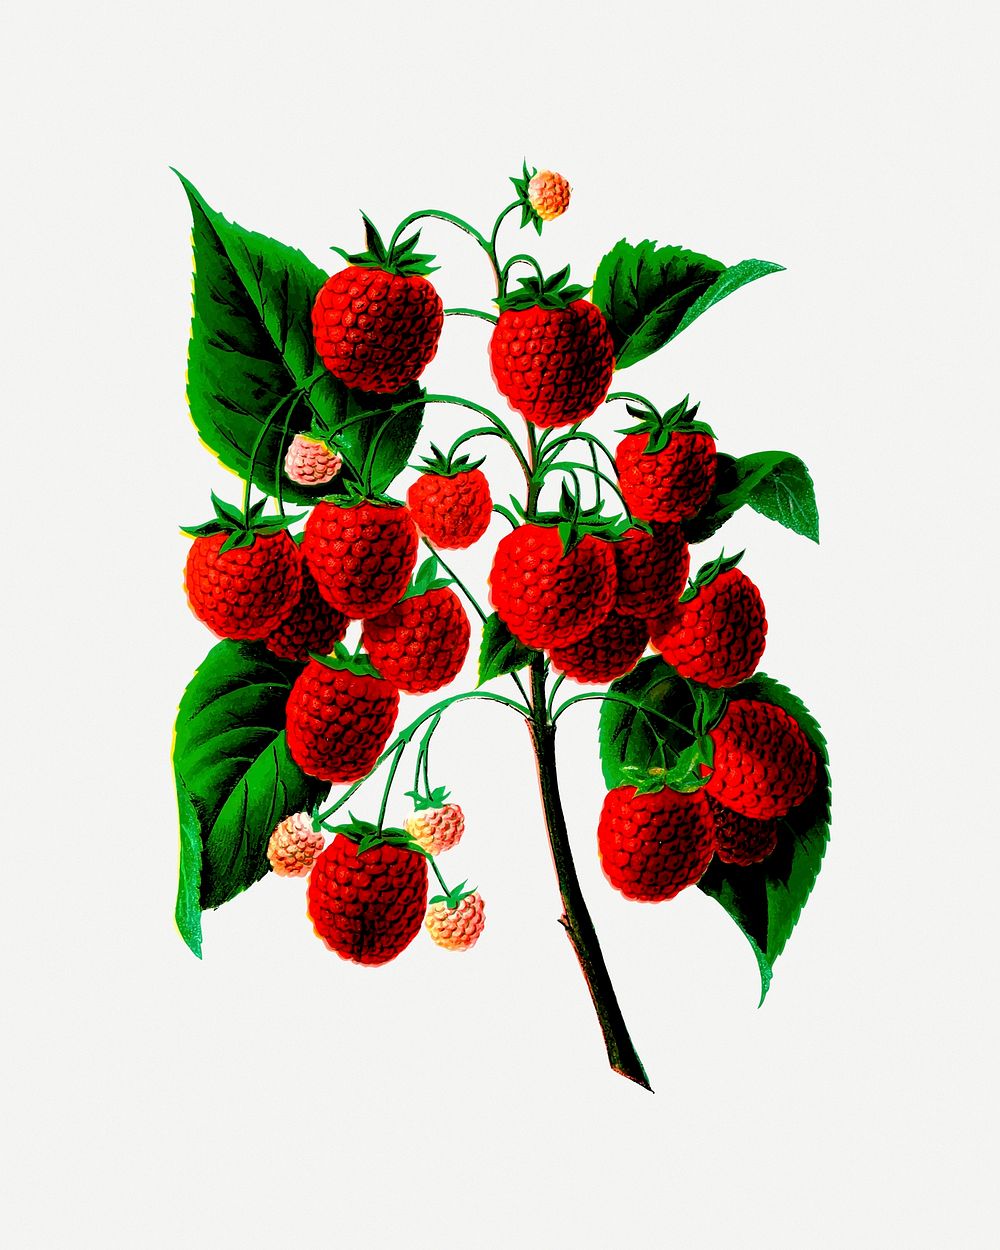 Strawberry illustration psd. Free public domain CC0 image.